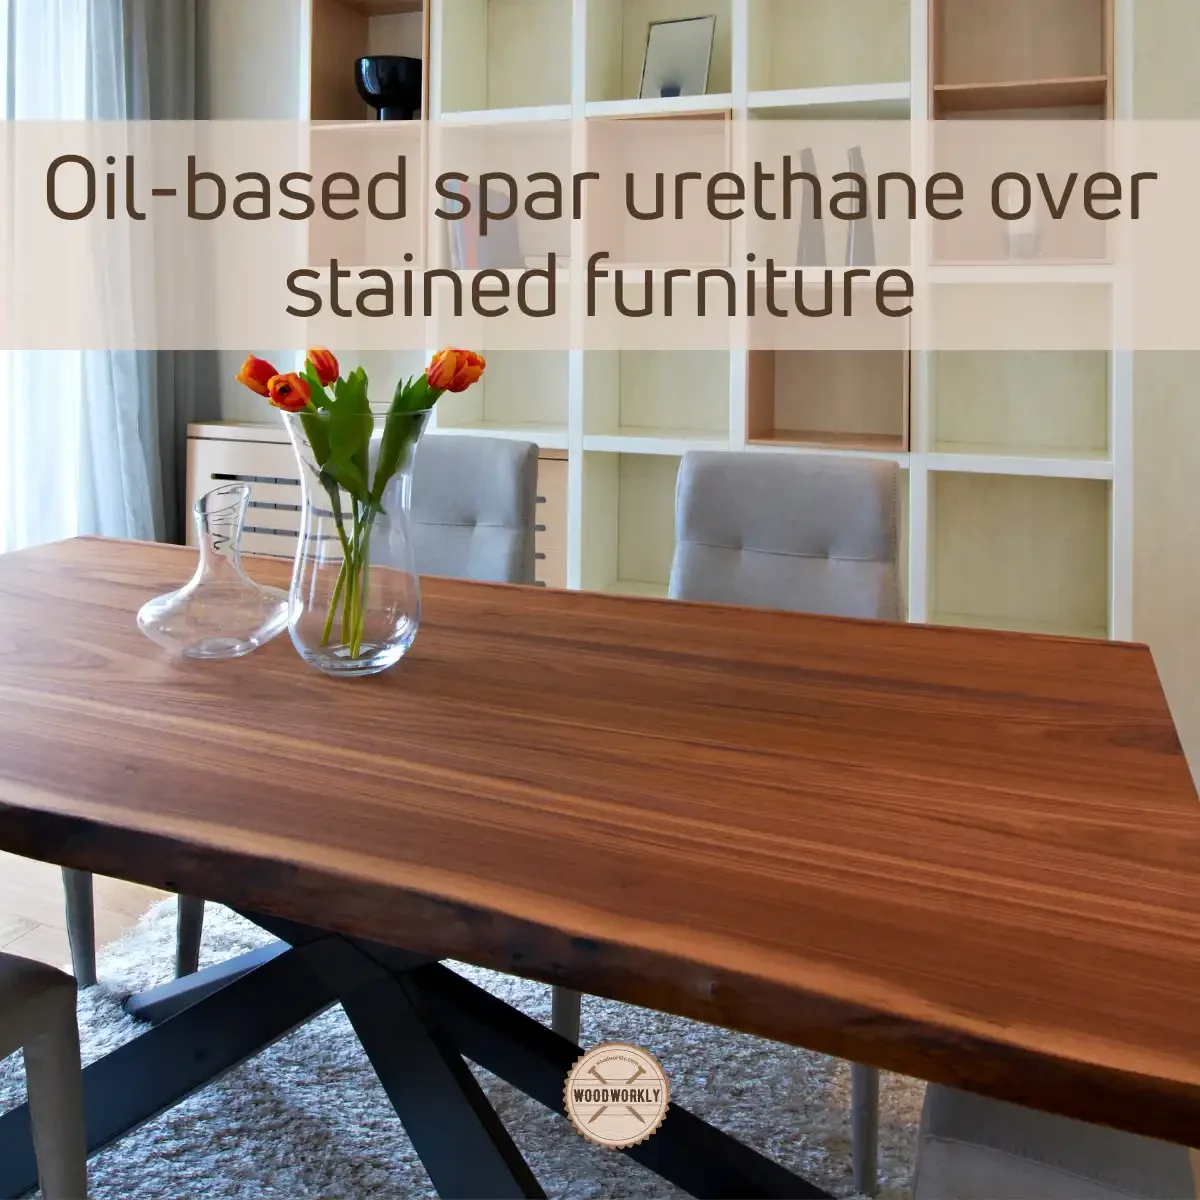 Oil-based spar urethane over stained furniture